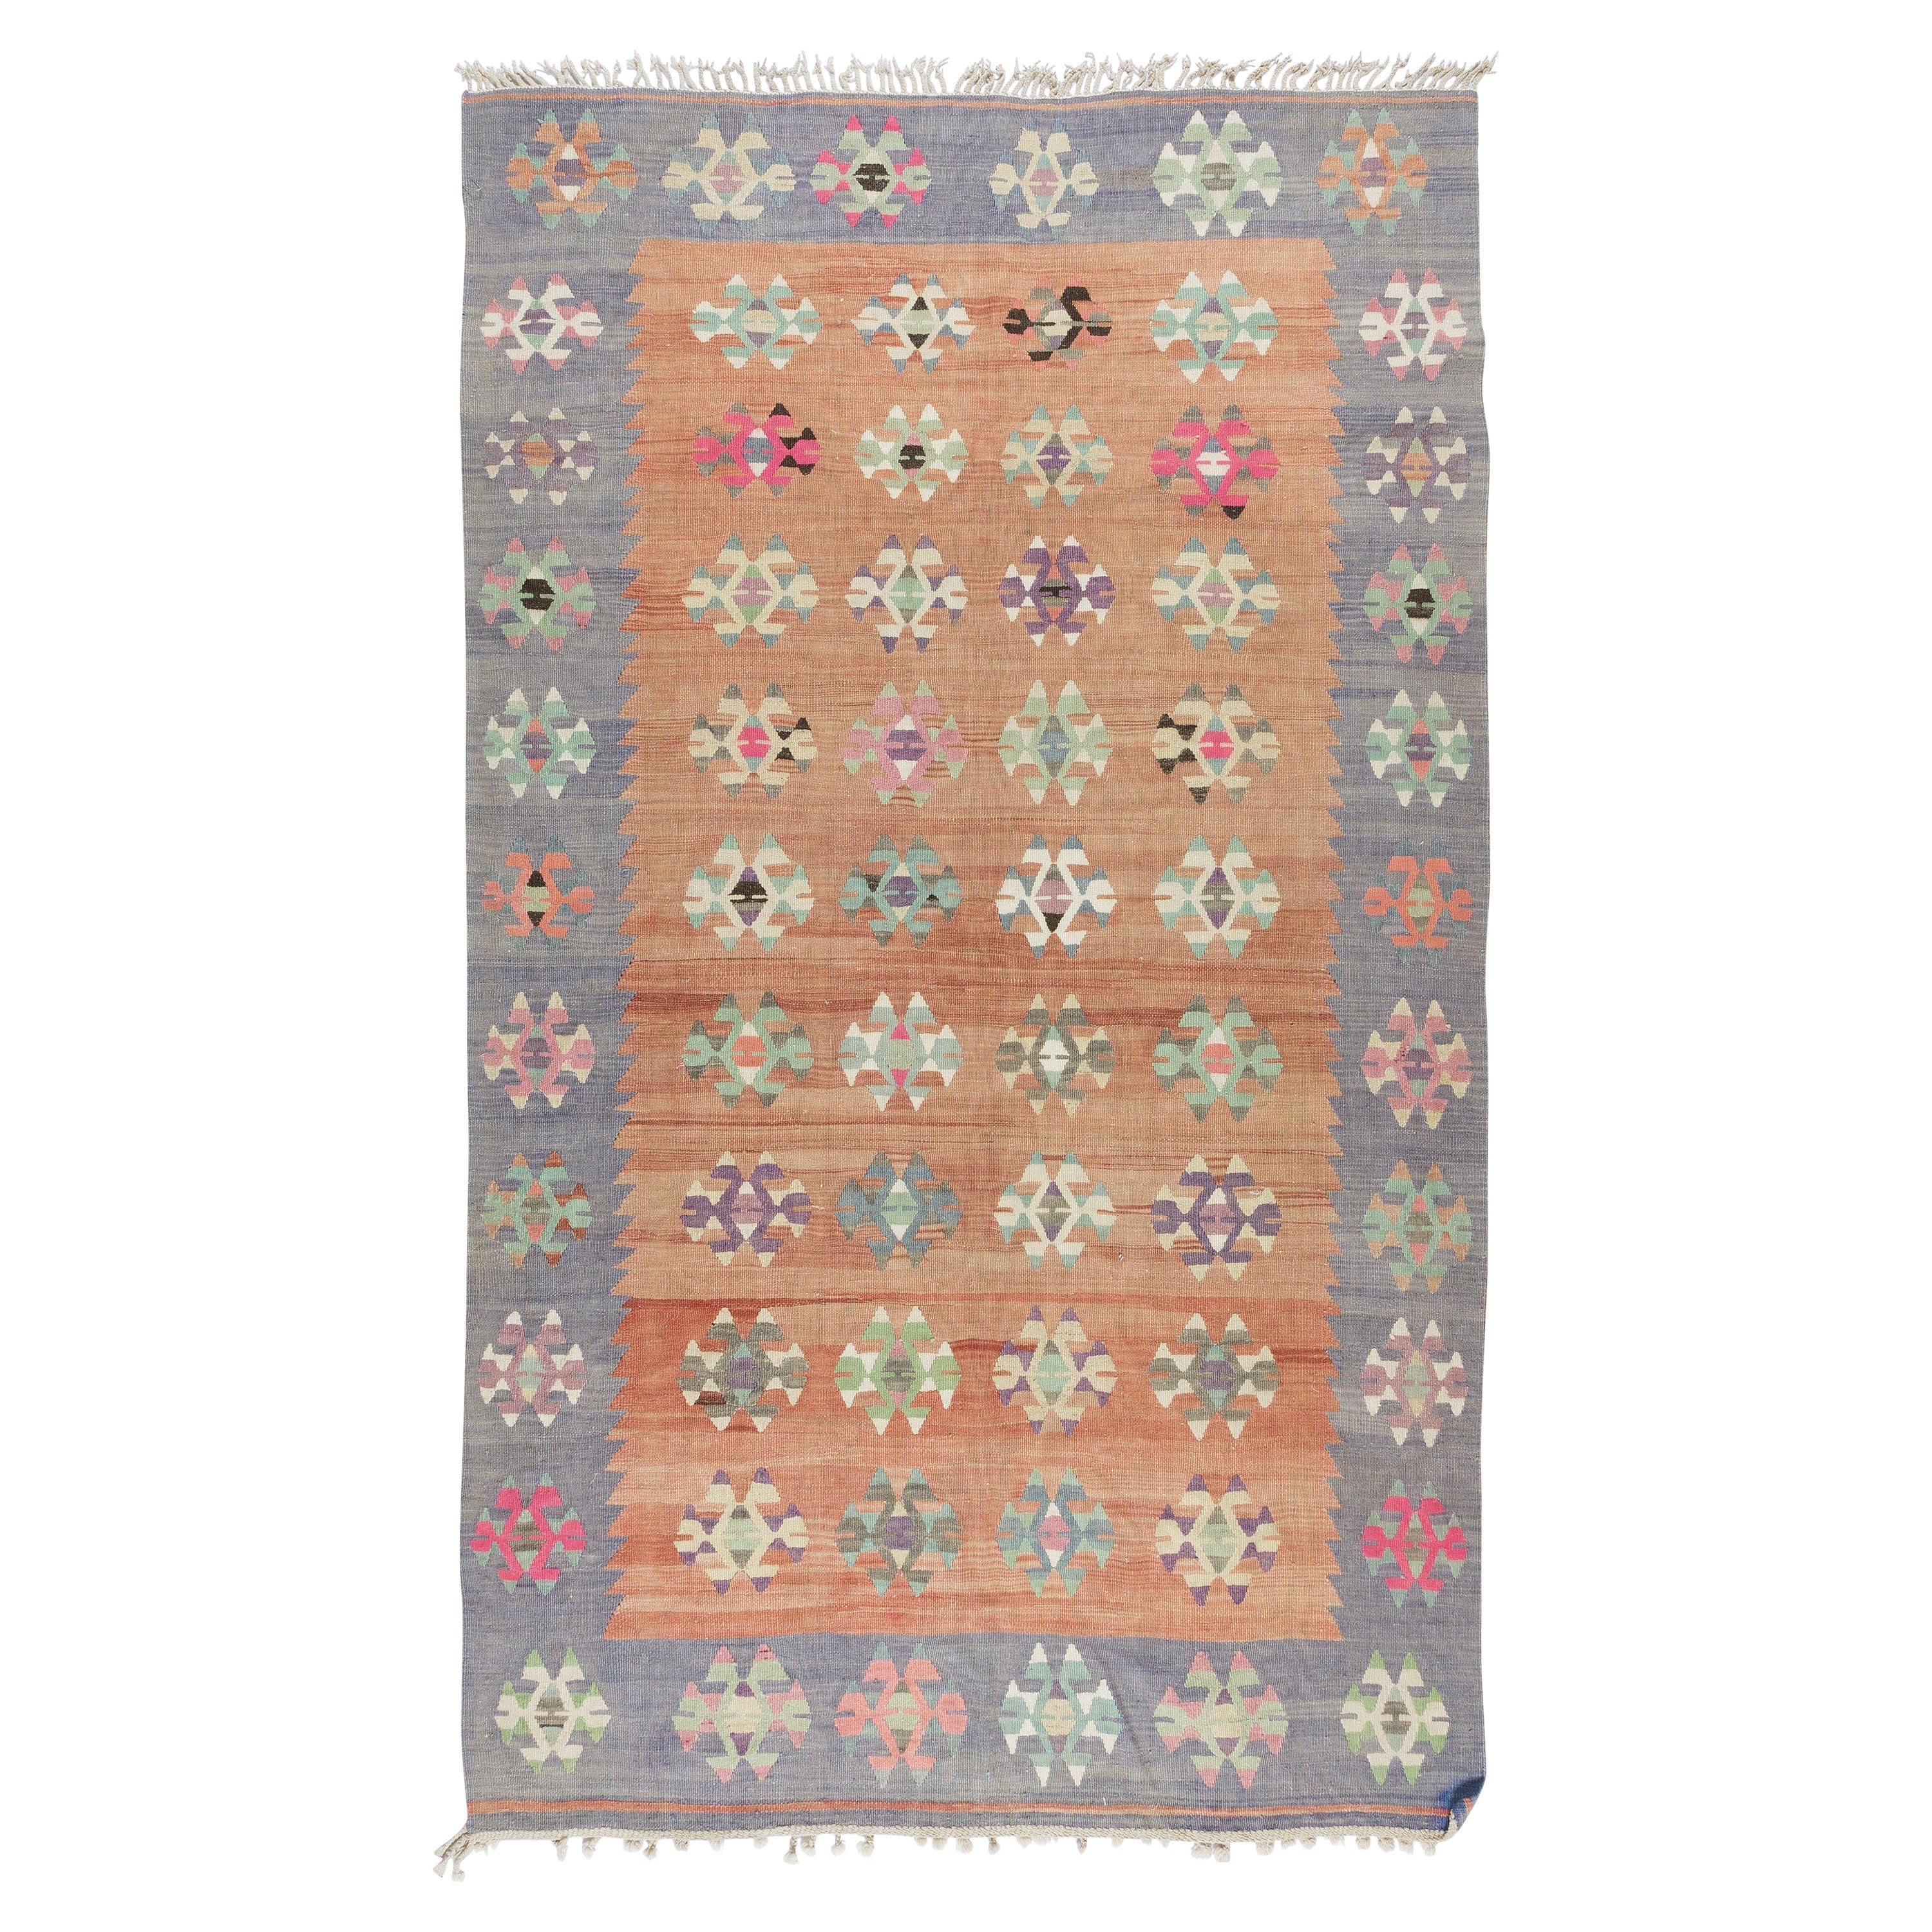 5.5x10.8 Ft Handmade Vintage Turkish Colorful Kilim, Flat-Weave Floor Covering For Sale